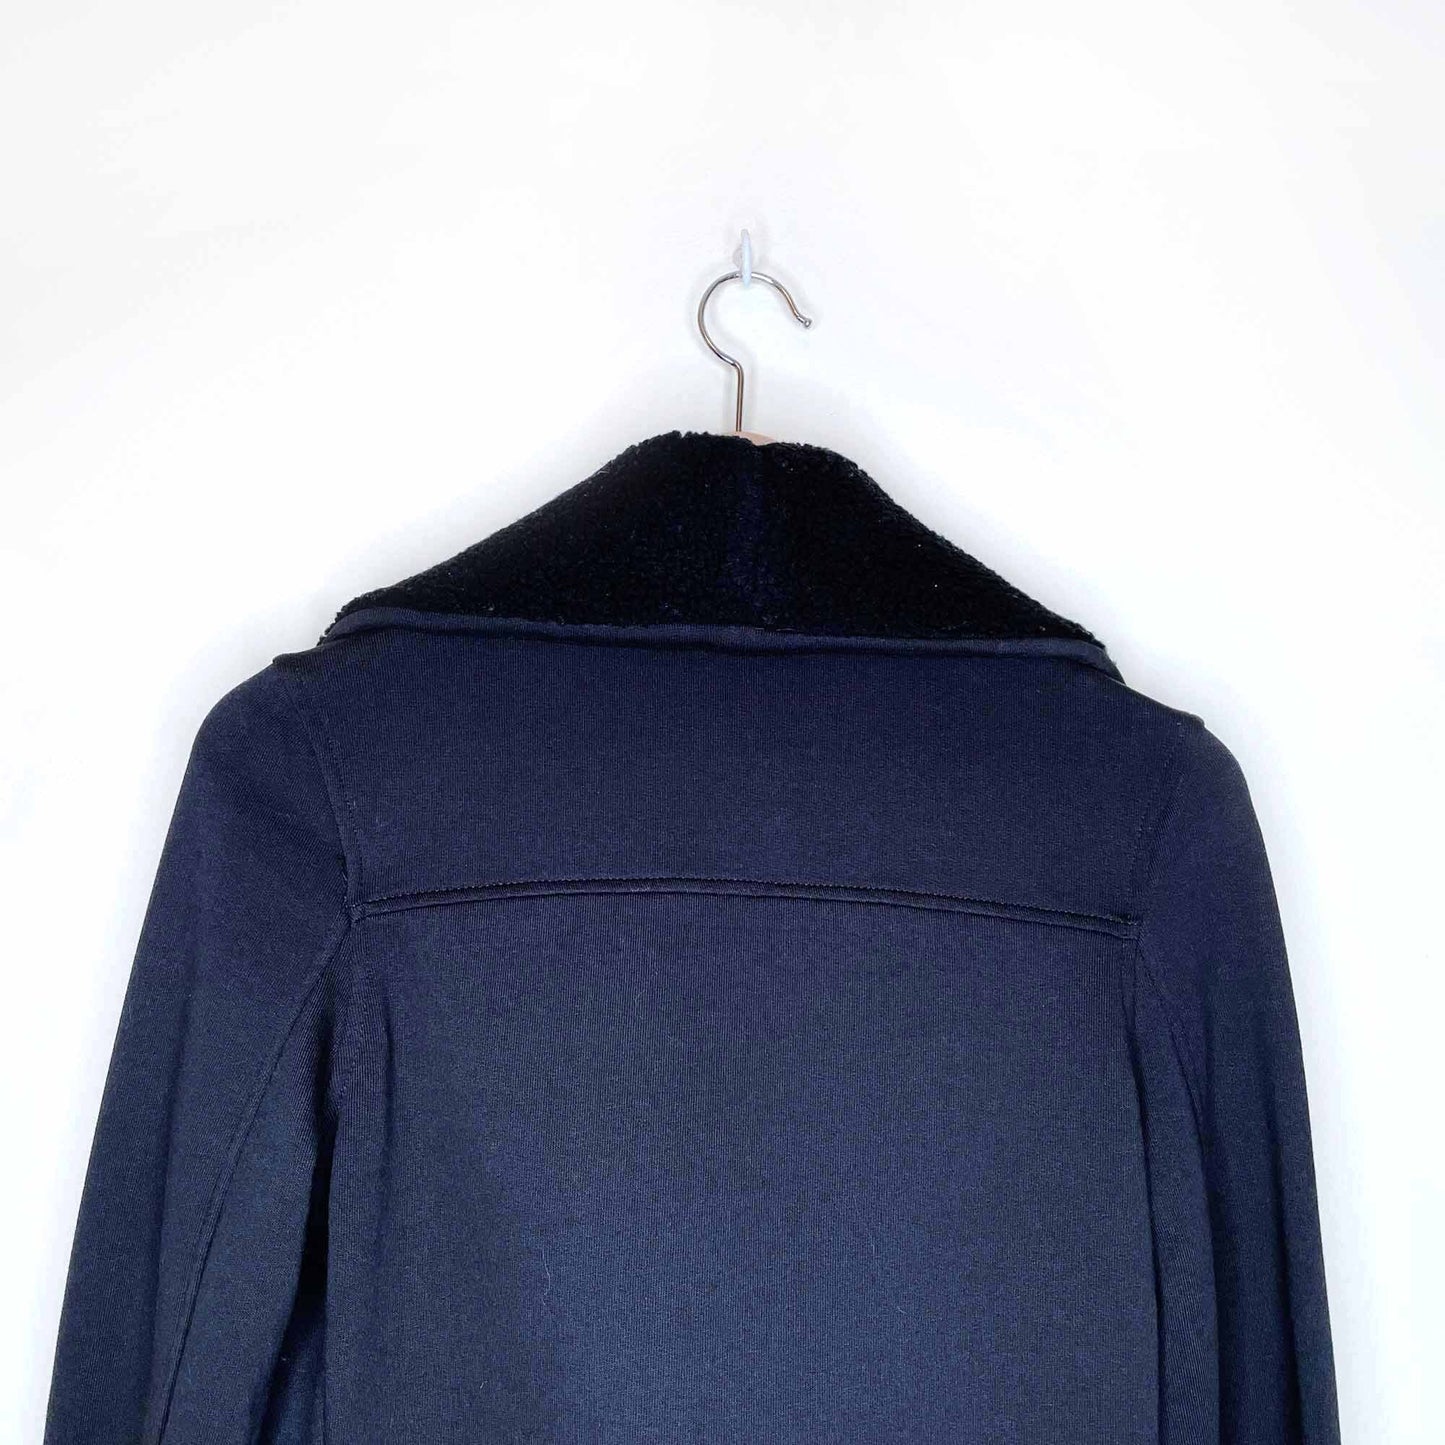 all saints bora sherpa collar sweatshirt jacket - size small